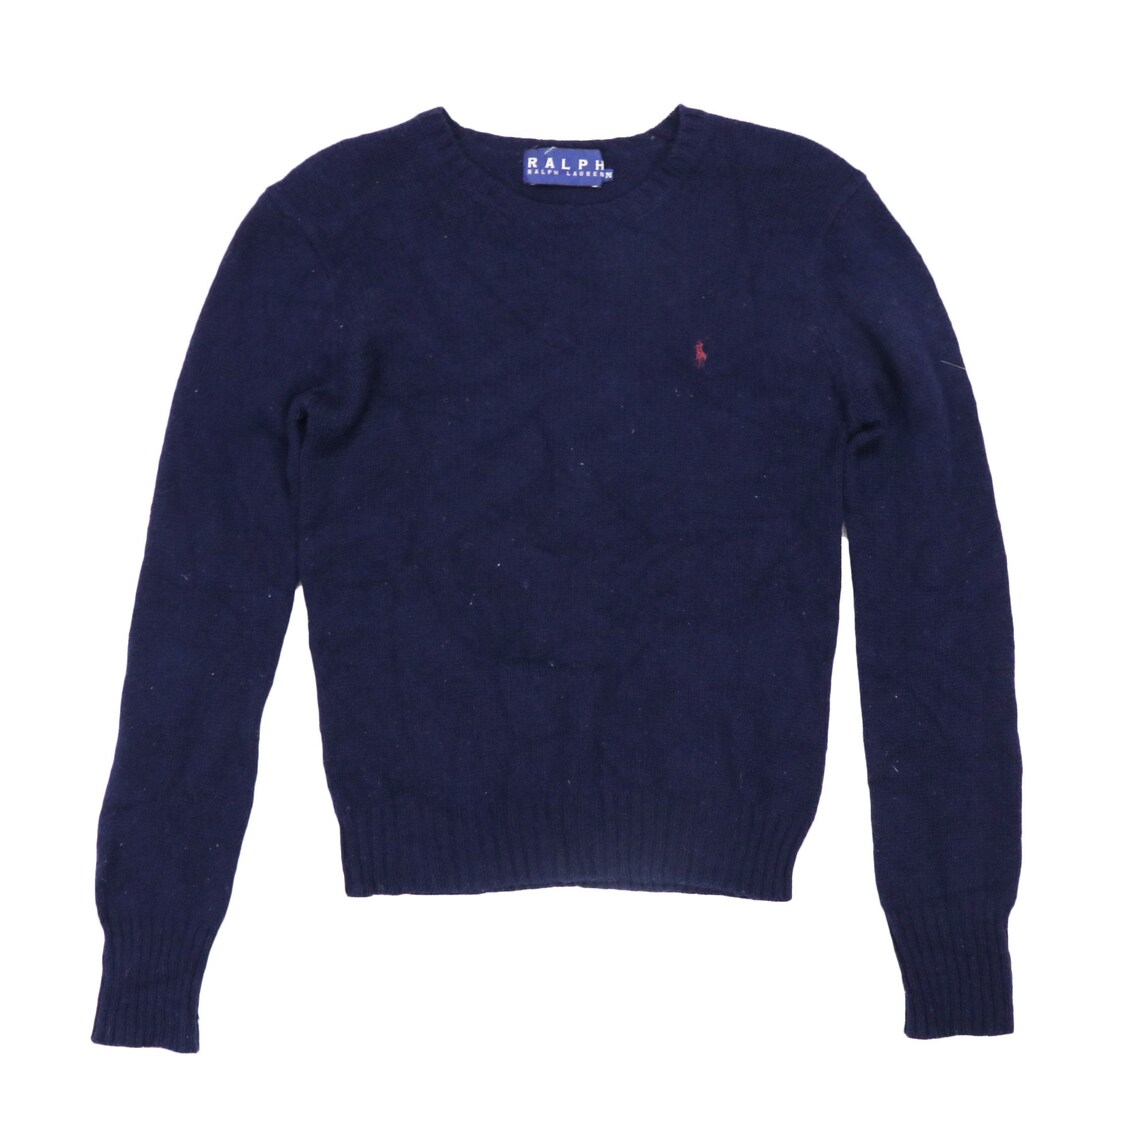 Vintage Polo Ralph Lauren Knitwear Sweatshirt Crewneck | Etsy